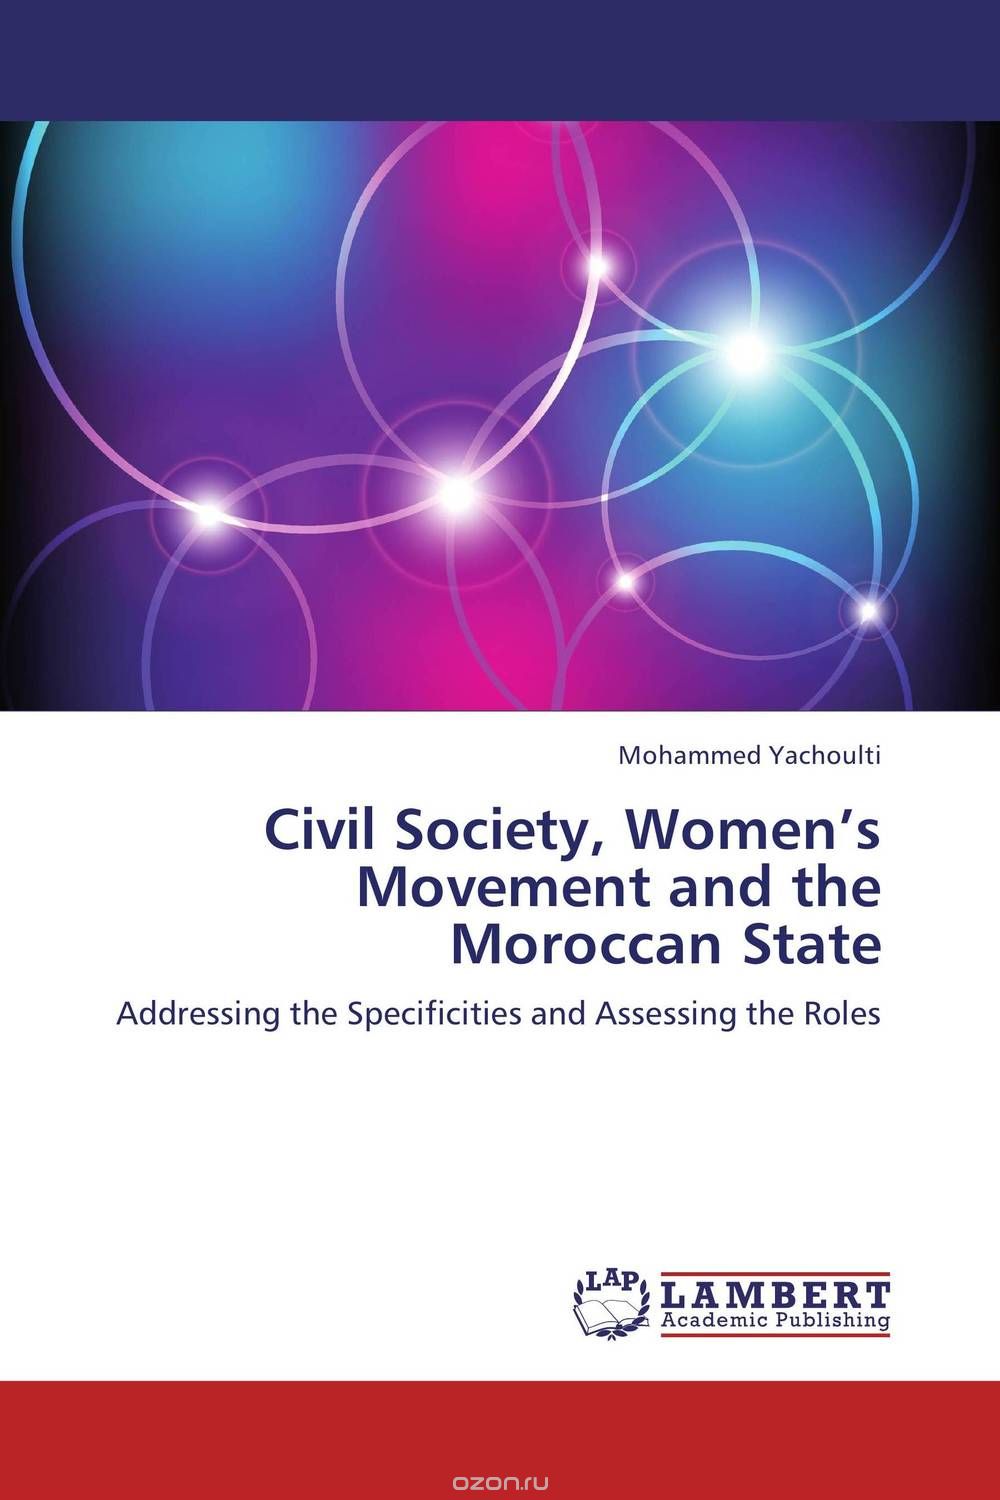 Скачать книгу "Civil Society, Women’s Movement and the Moroccan State"